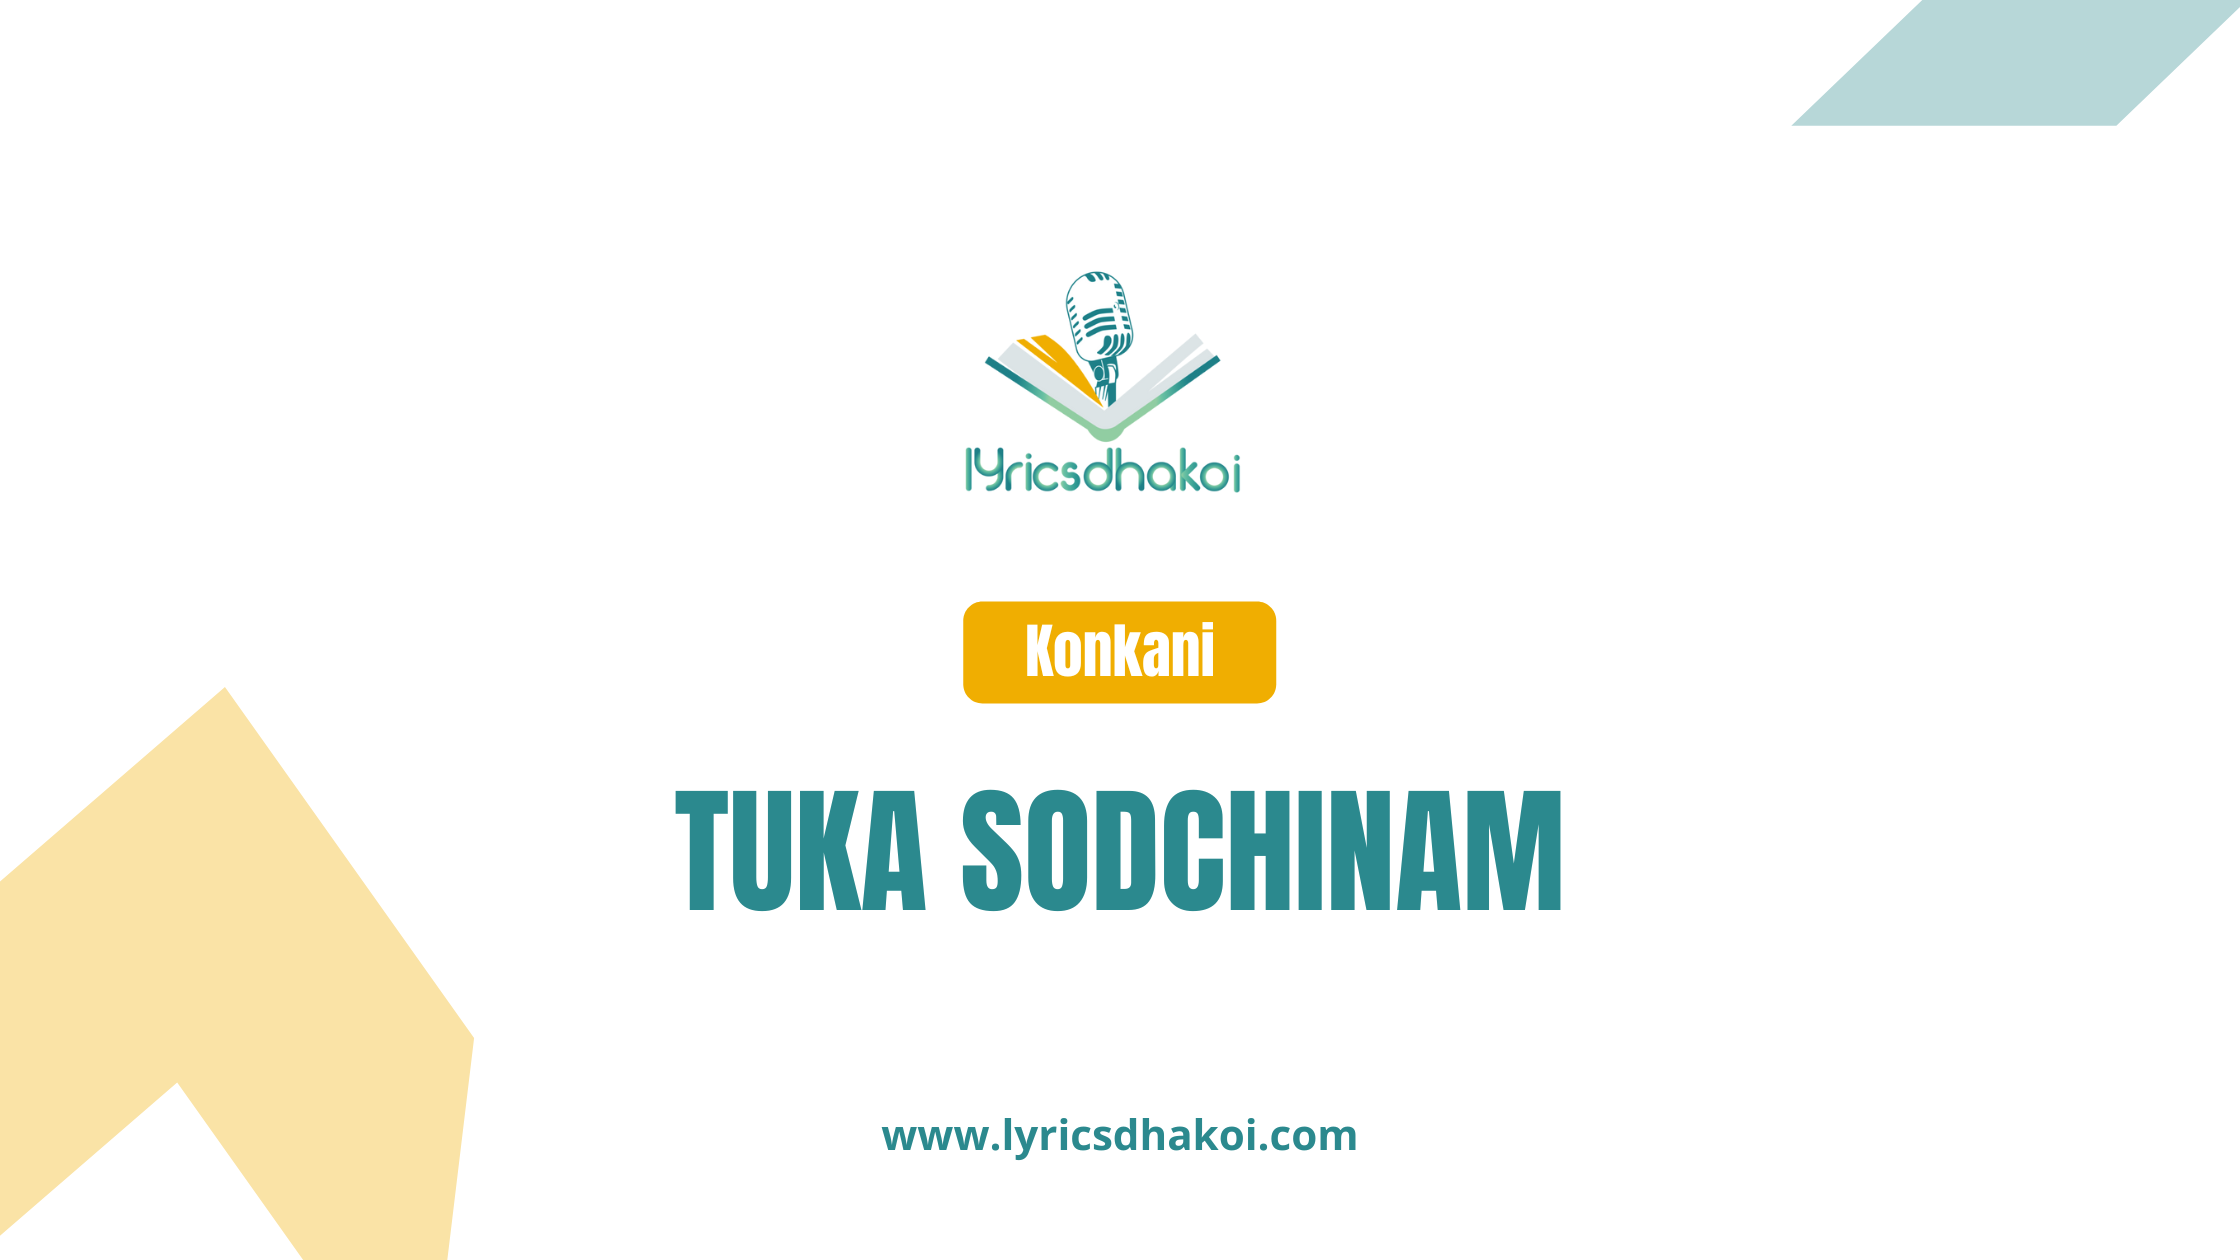 Tuka Sodchinam Konkani Lyrics for Karaoke Online - LyricsDhakoi.com